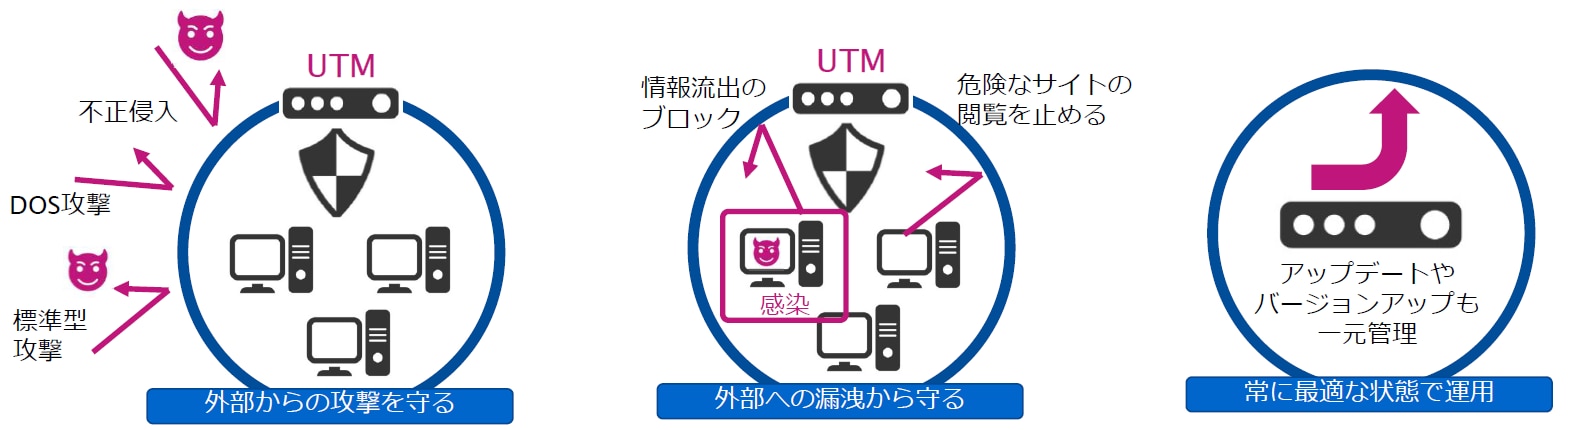 UTMサービスは、複数のセキュリティー機能を提供します